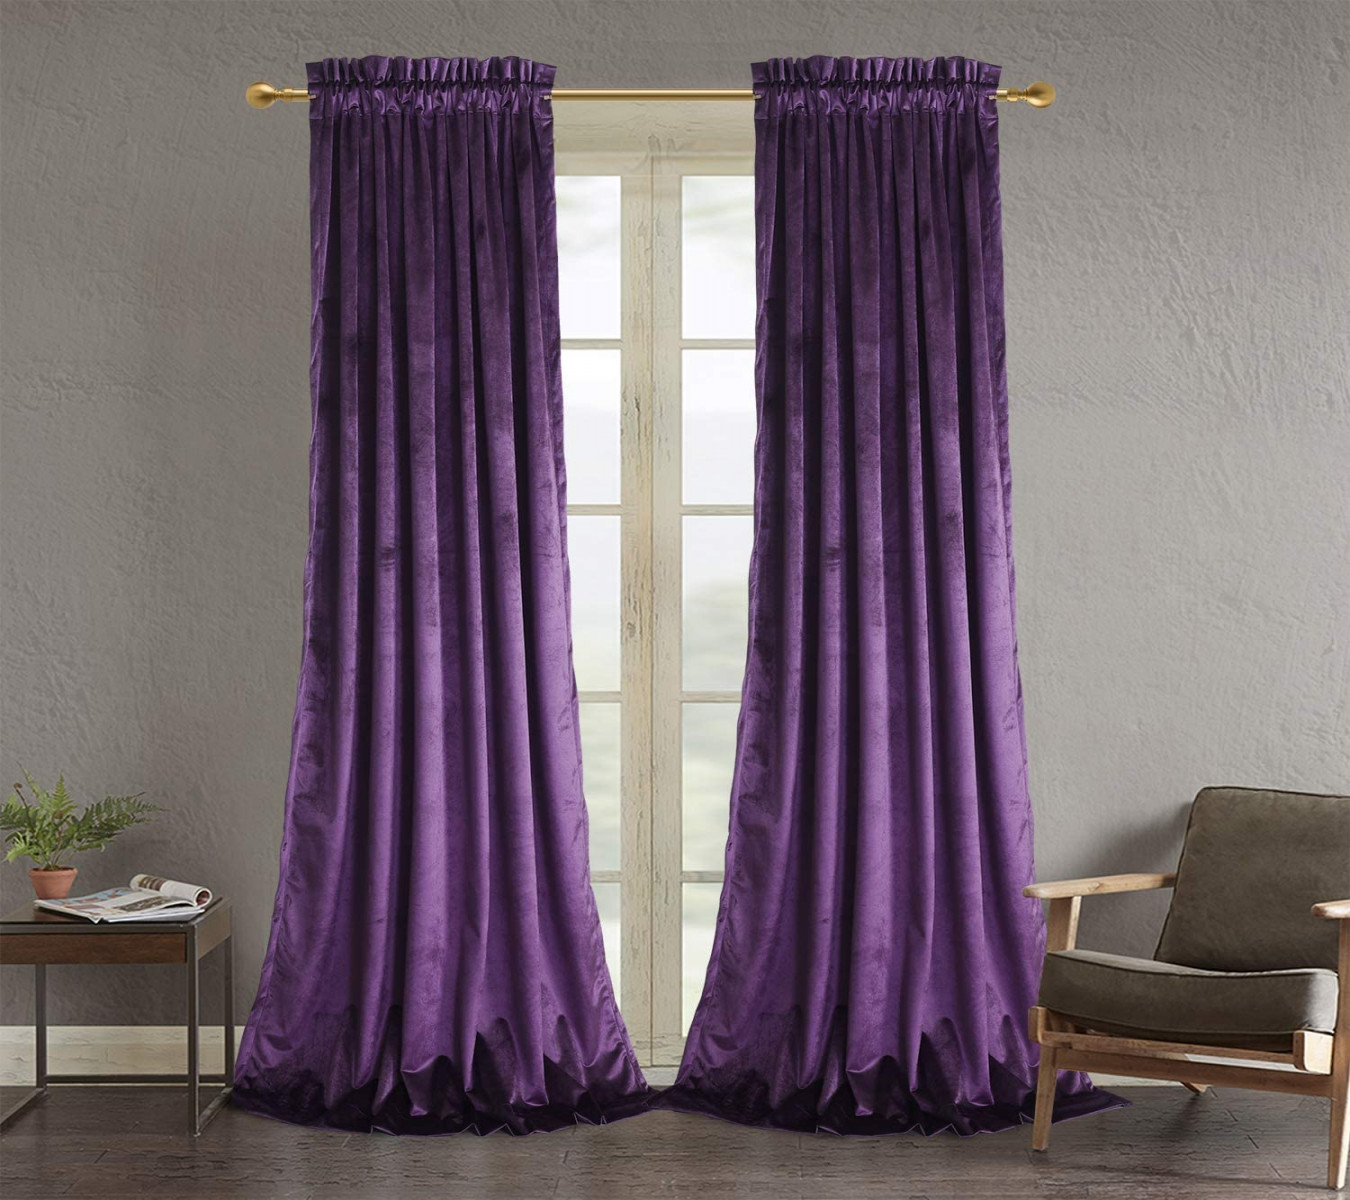 Roslynwood Purple Velvet Curtains for Living Room - Velvet Curtain Panels  Privacy Screen Rod Pocket Window Curtains for Bedroom x Inch,  Panels